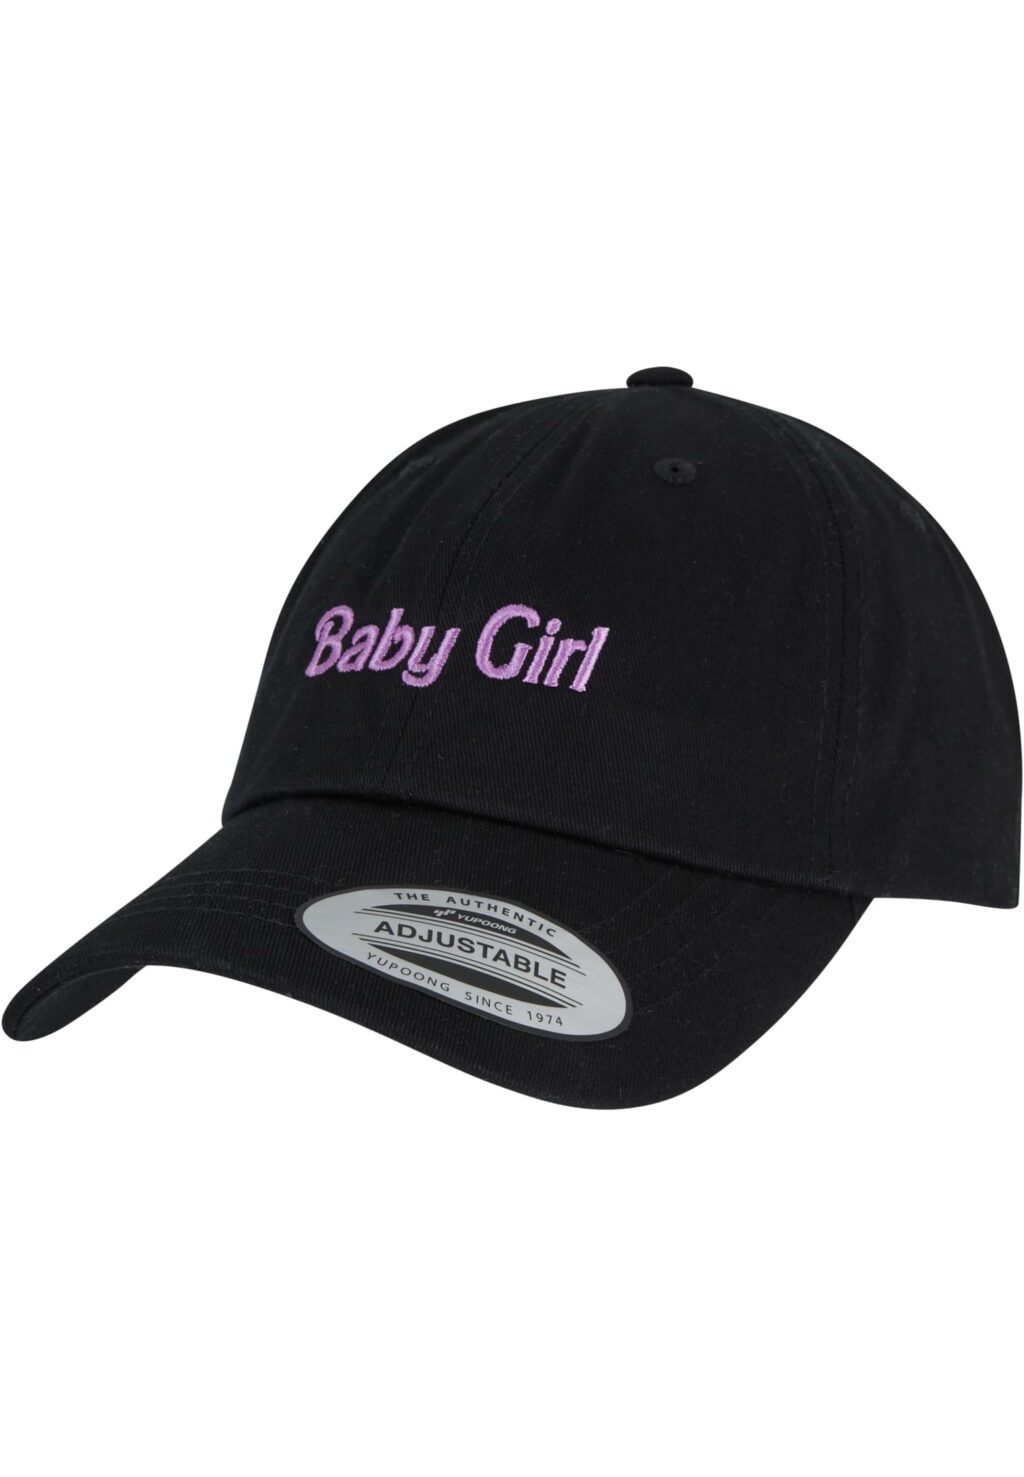 Baby Girl Cap  black one BE072